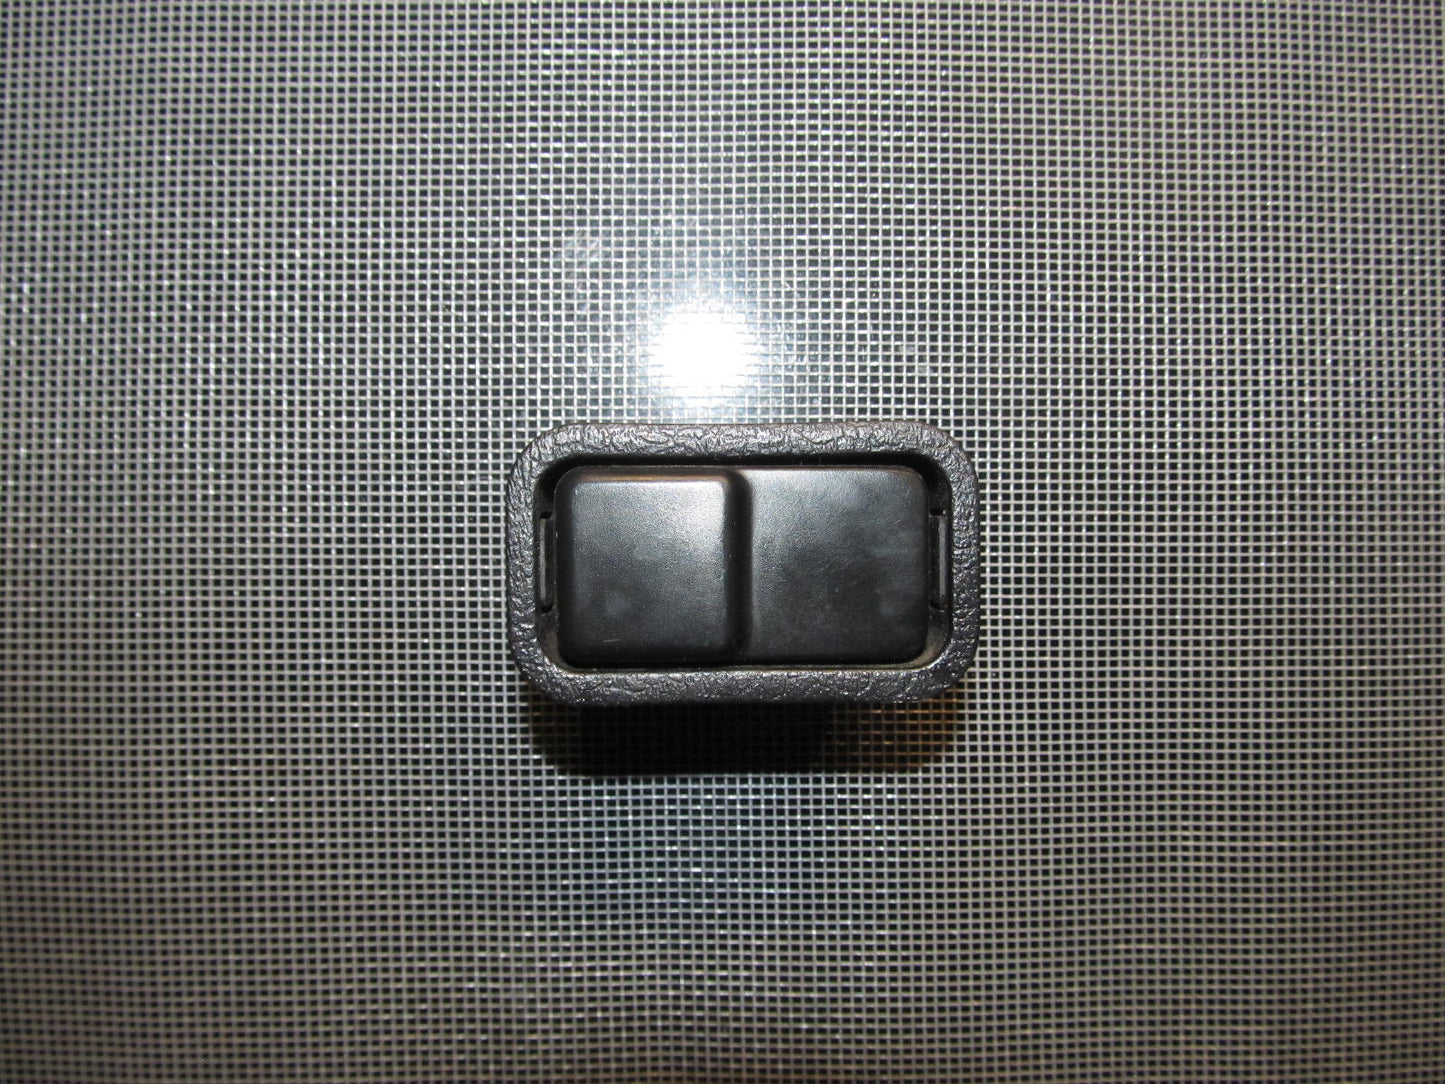 90 91 92 93 Mazda Miata OEM Dash Filler Cap Switch